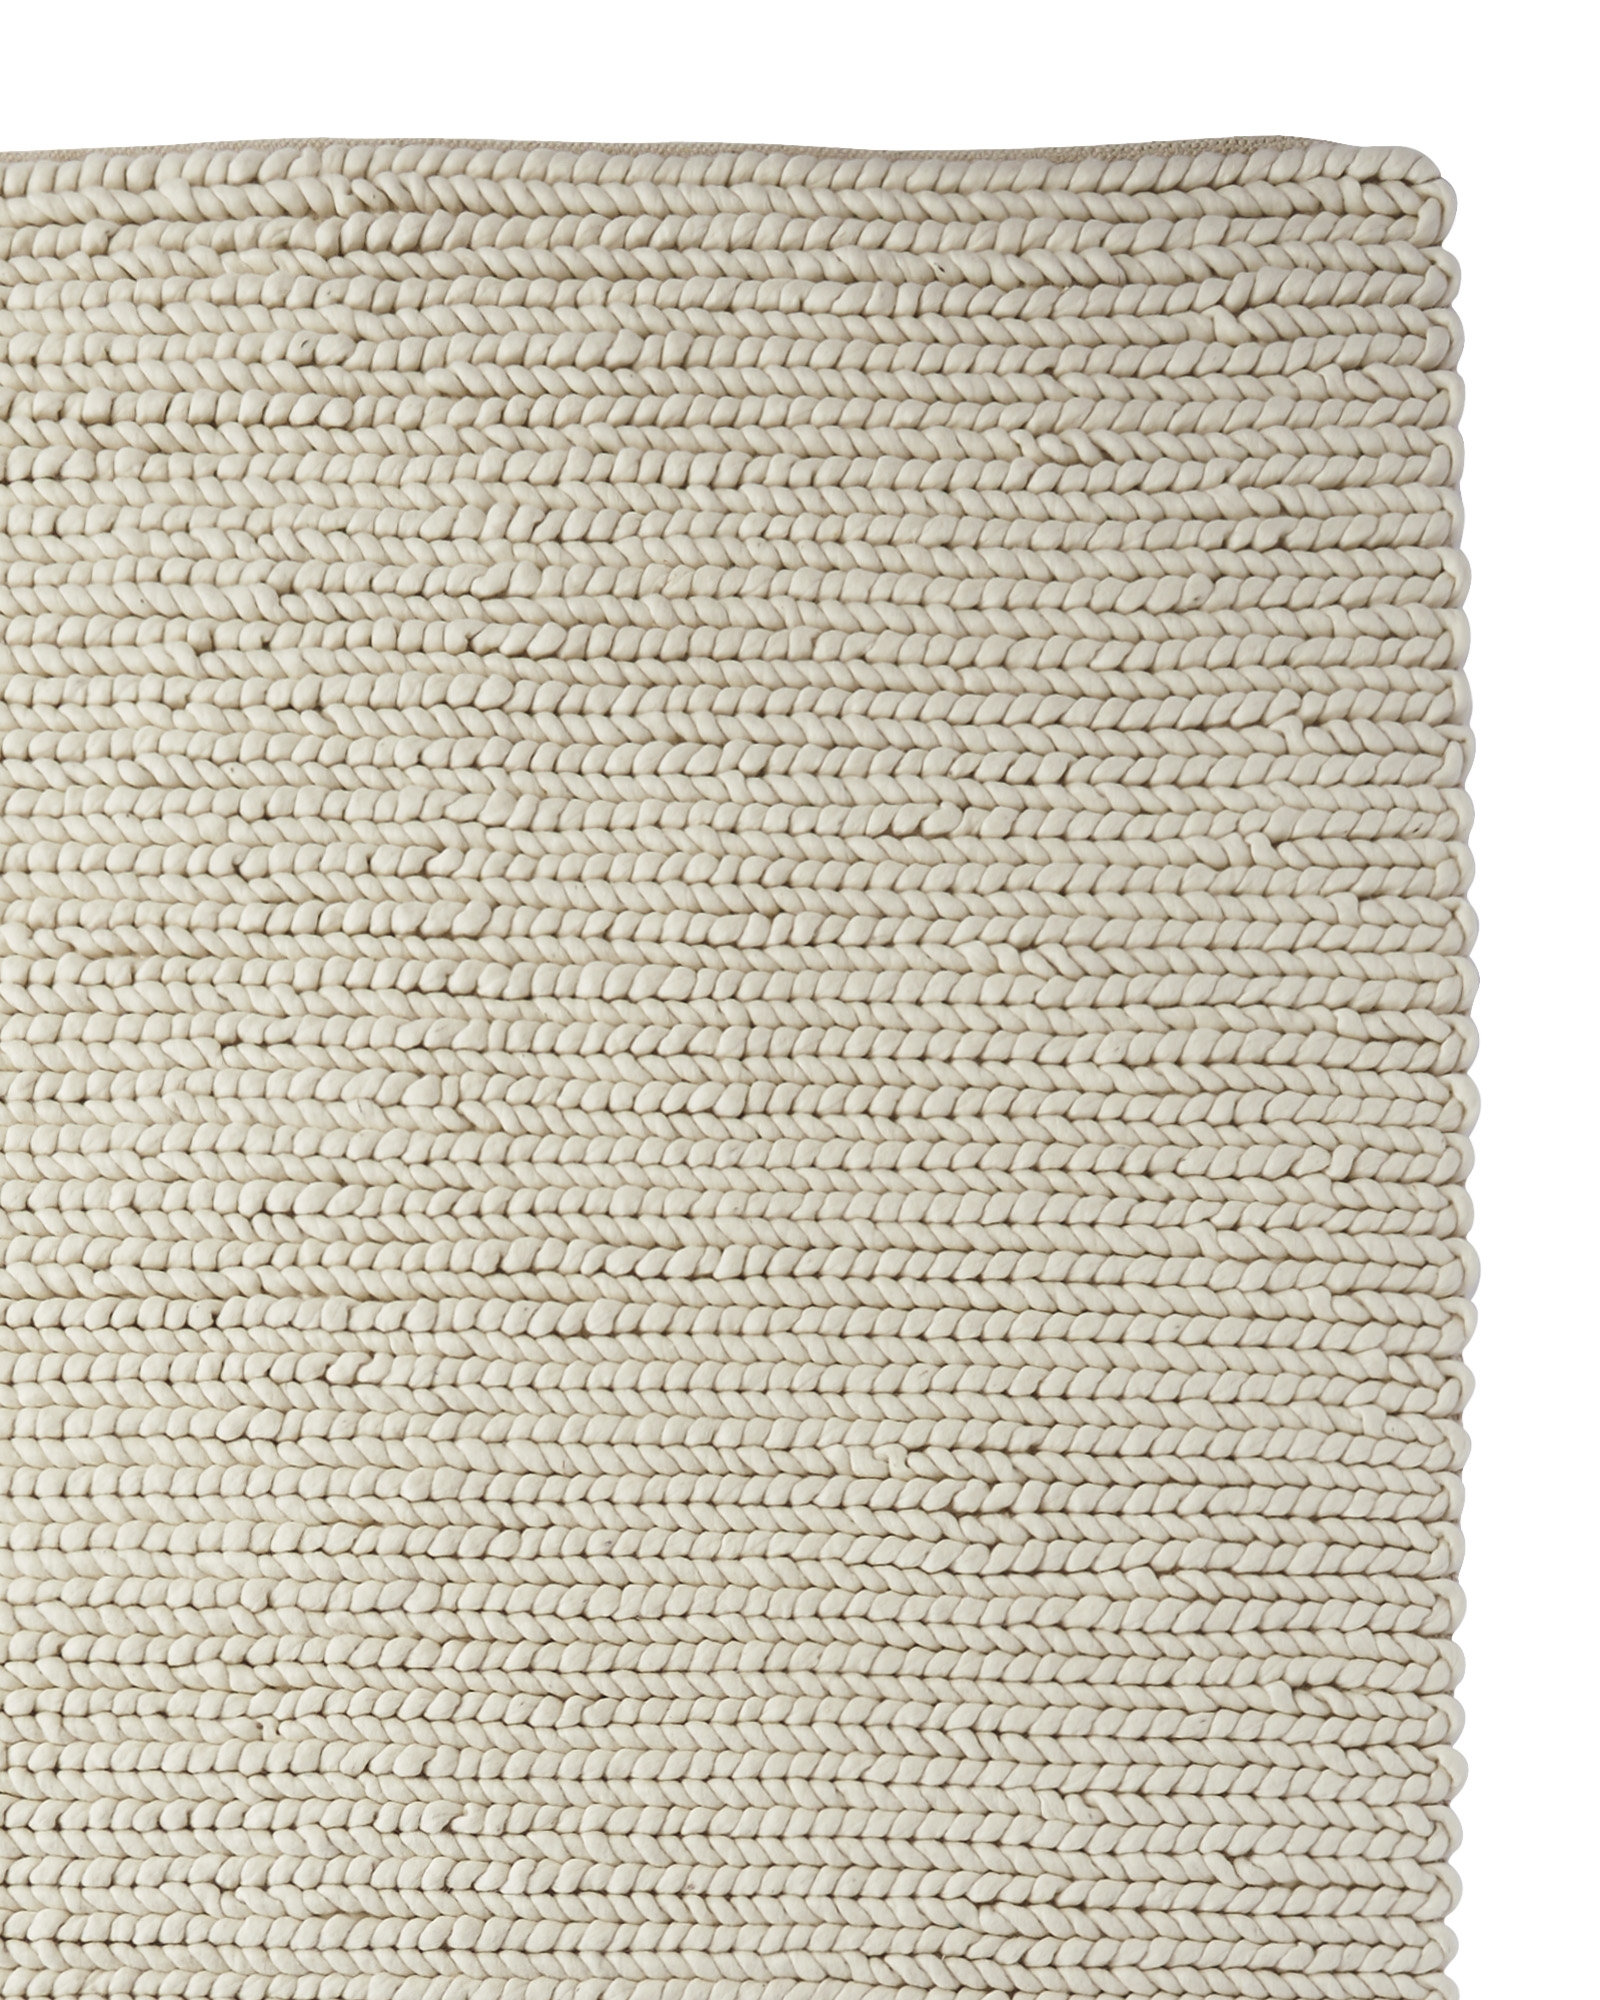 Braided Wool Rug - Ivory - 8' x 10' - Image 1